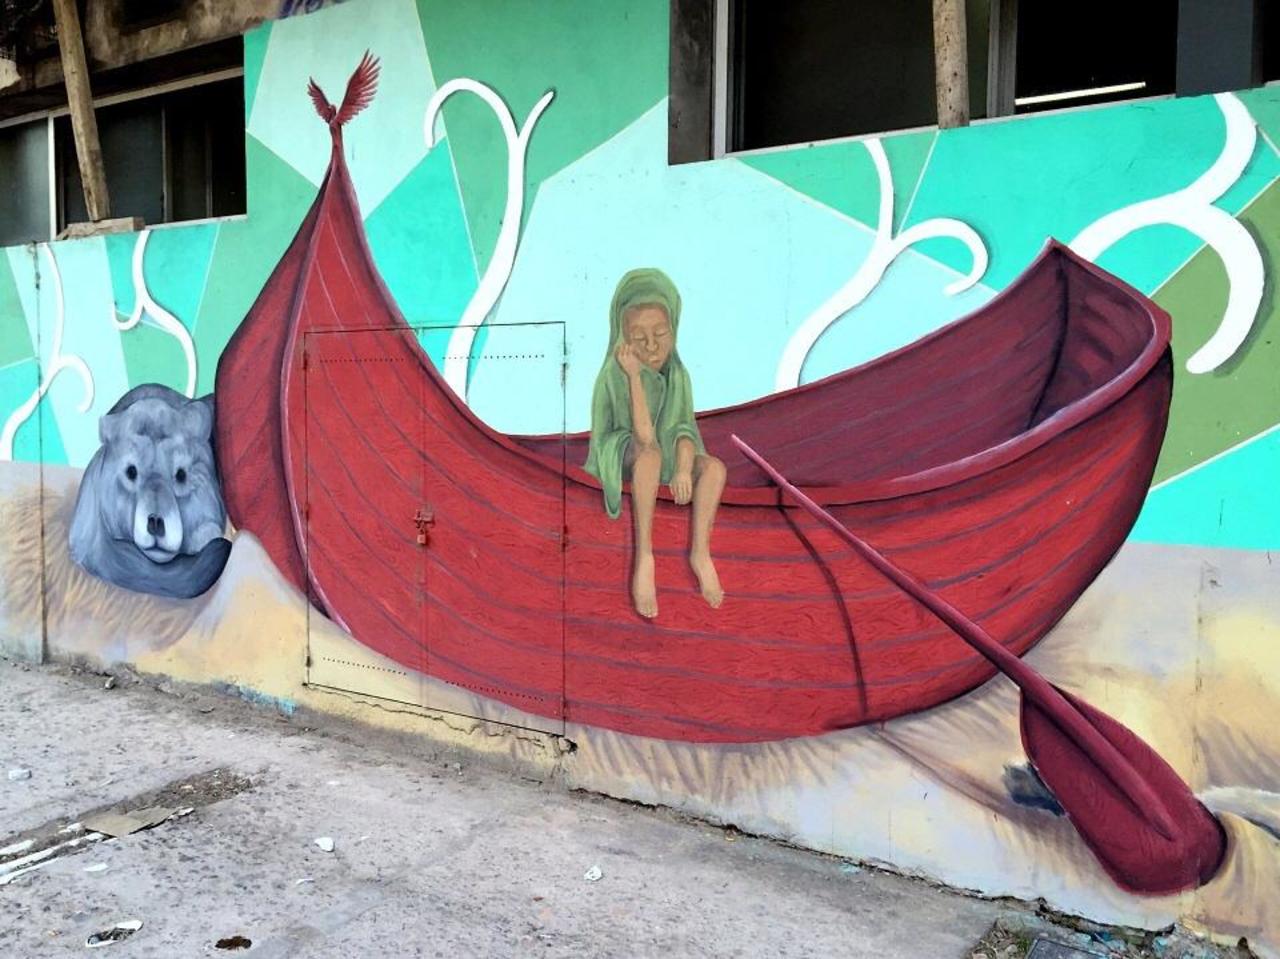 #Graffiti de hoy: << The shipwreck >> calle 22, 60y61 #LaPlata #Argentina #StreetArt #UrbanArt #ArteUrbano http://t.co/ilr4usvtKz